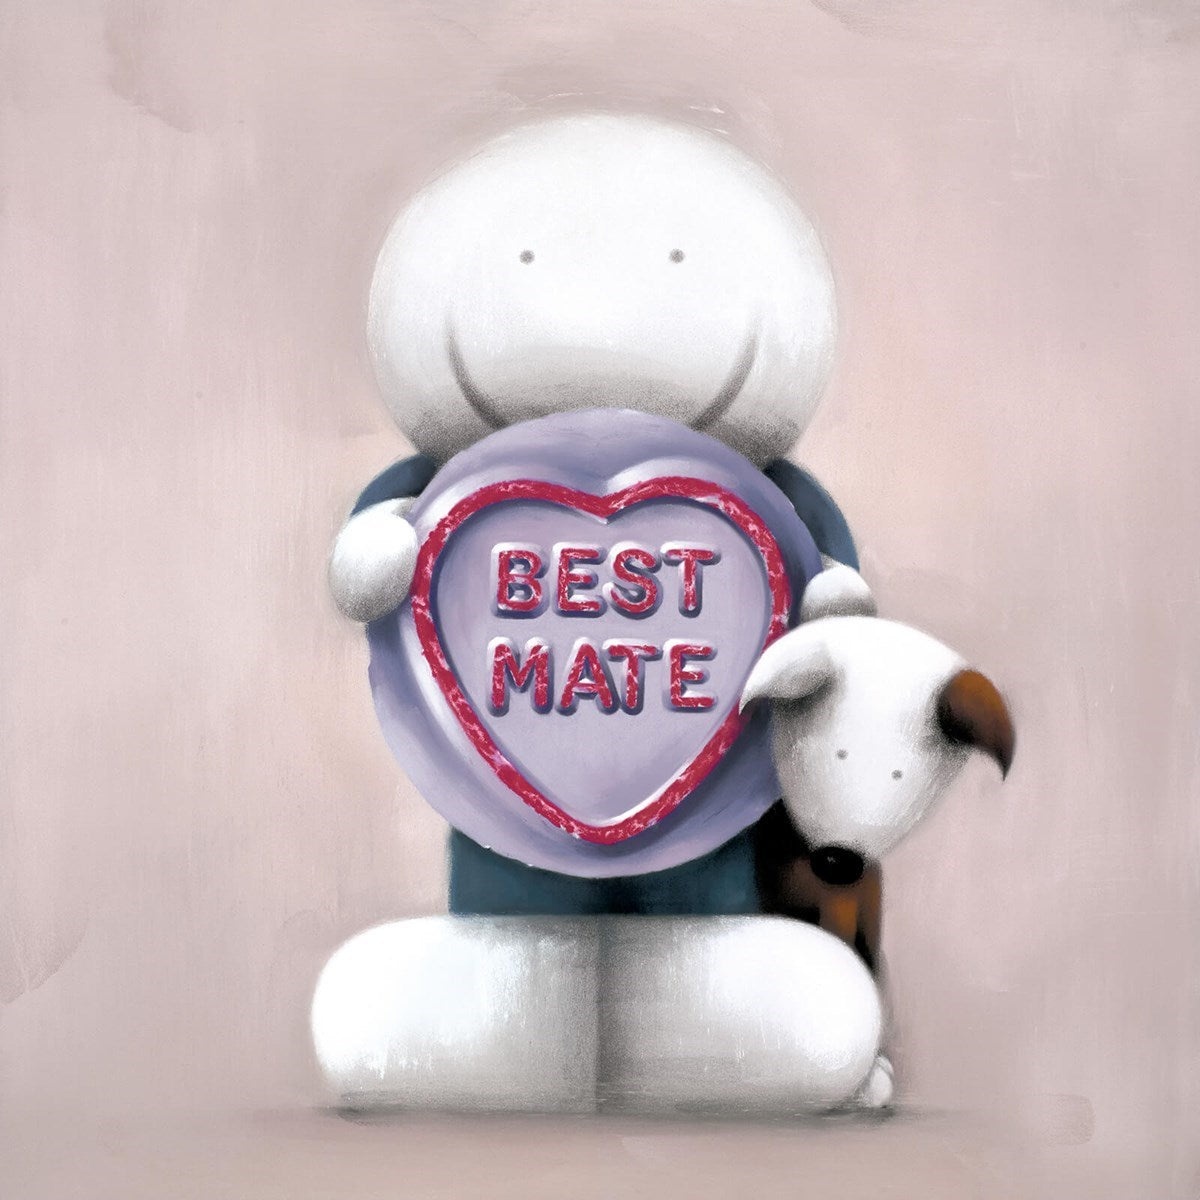 Best Mate by Doug Hyde